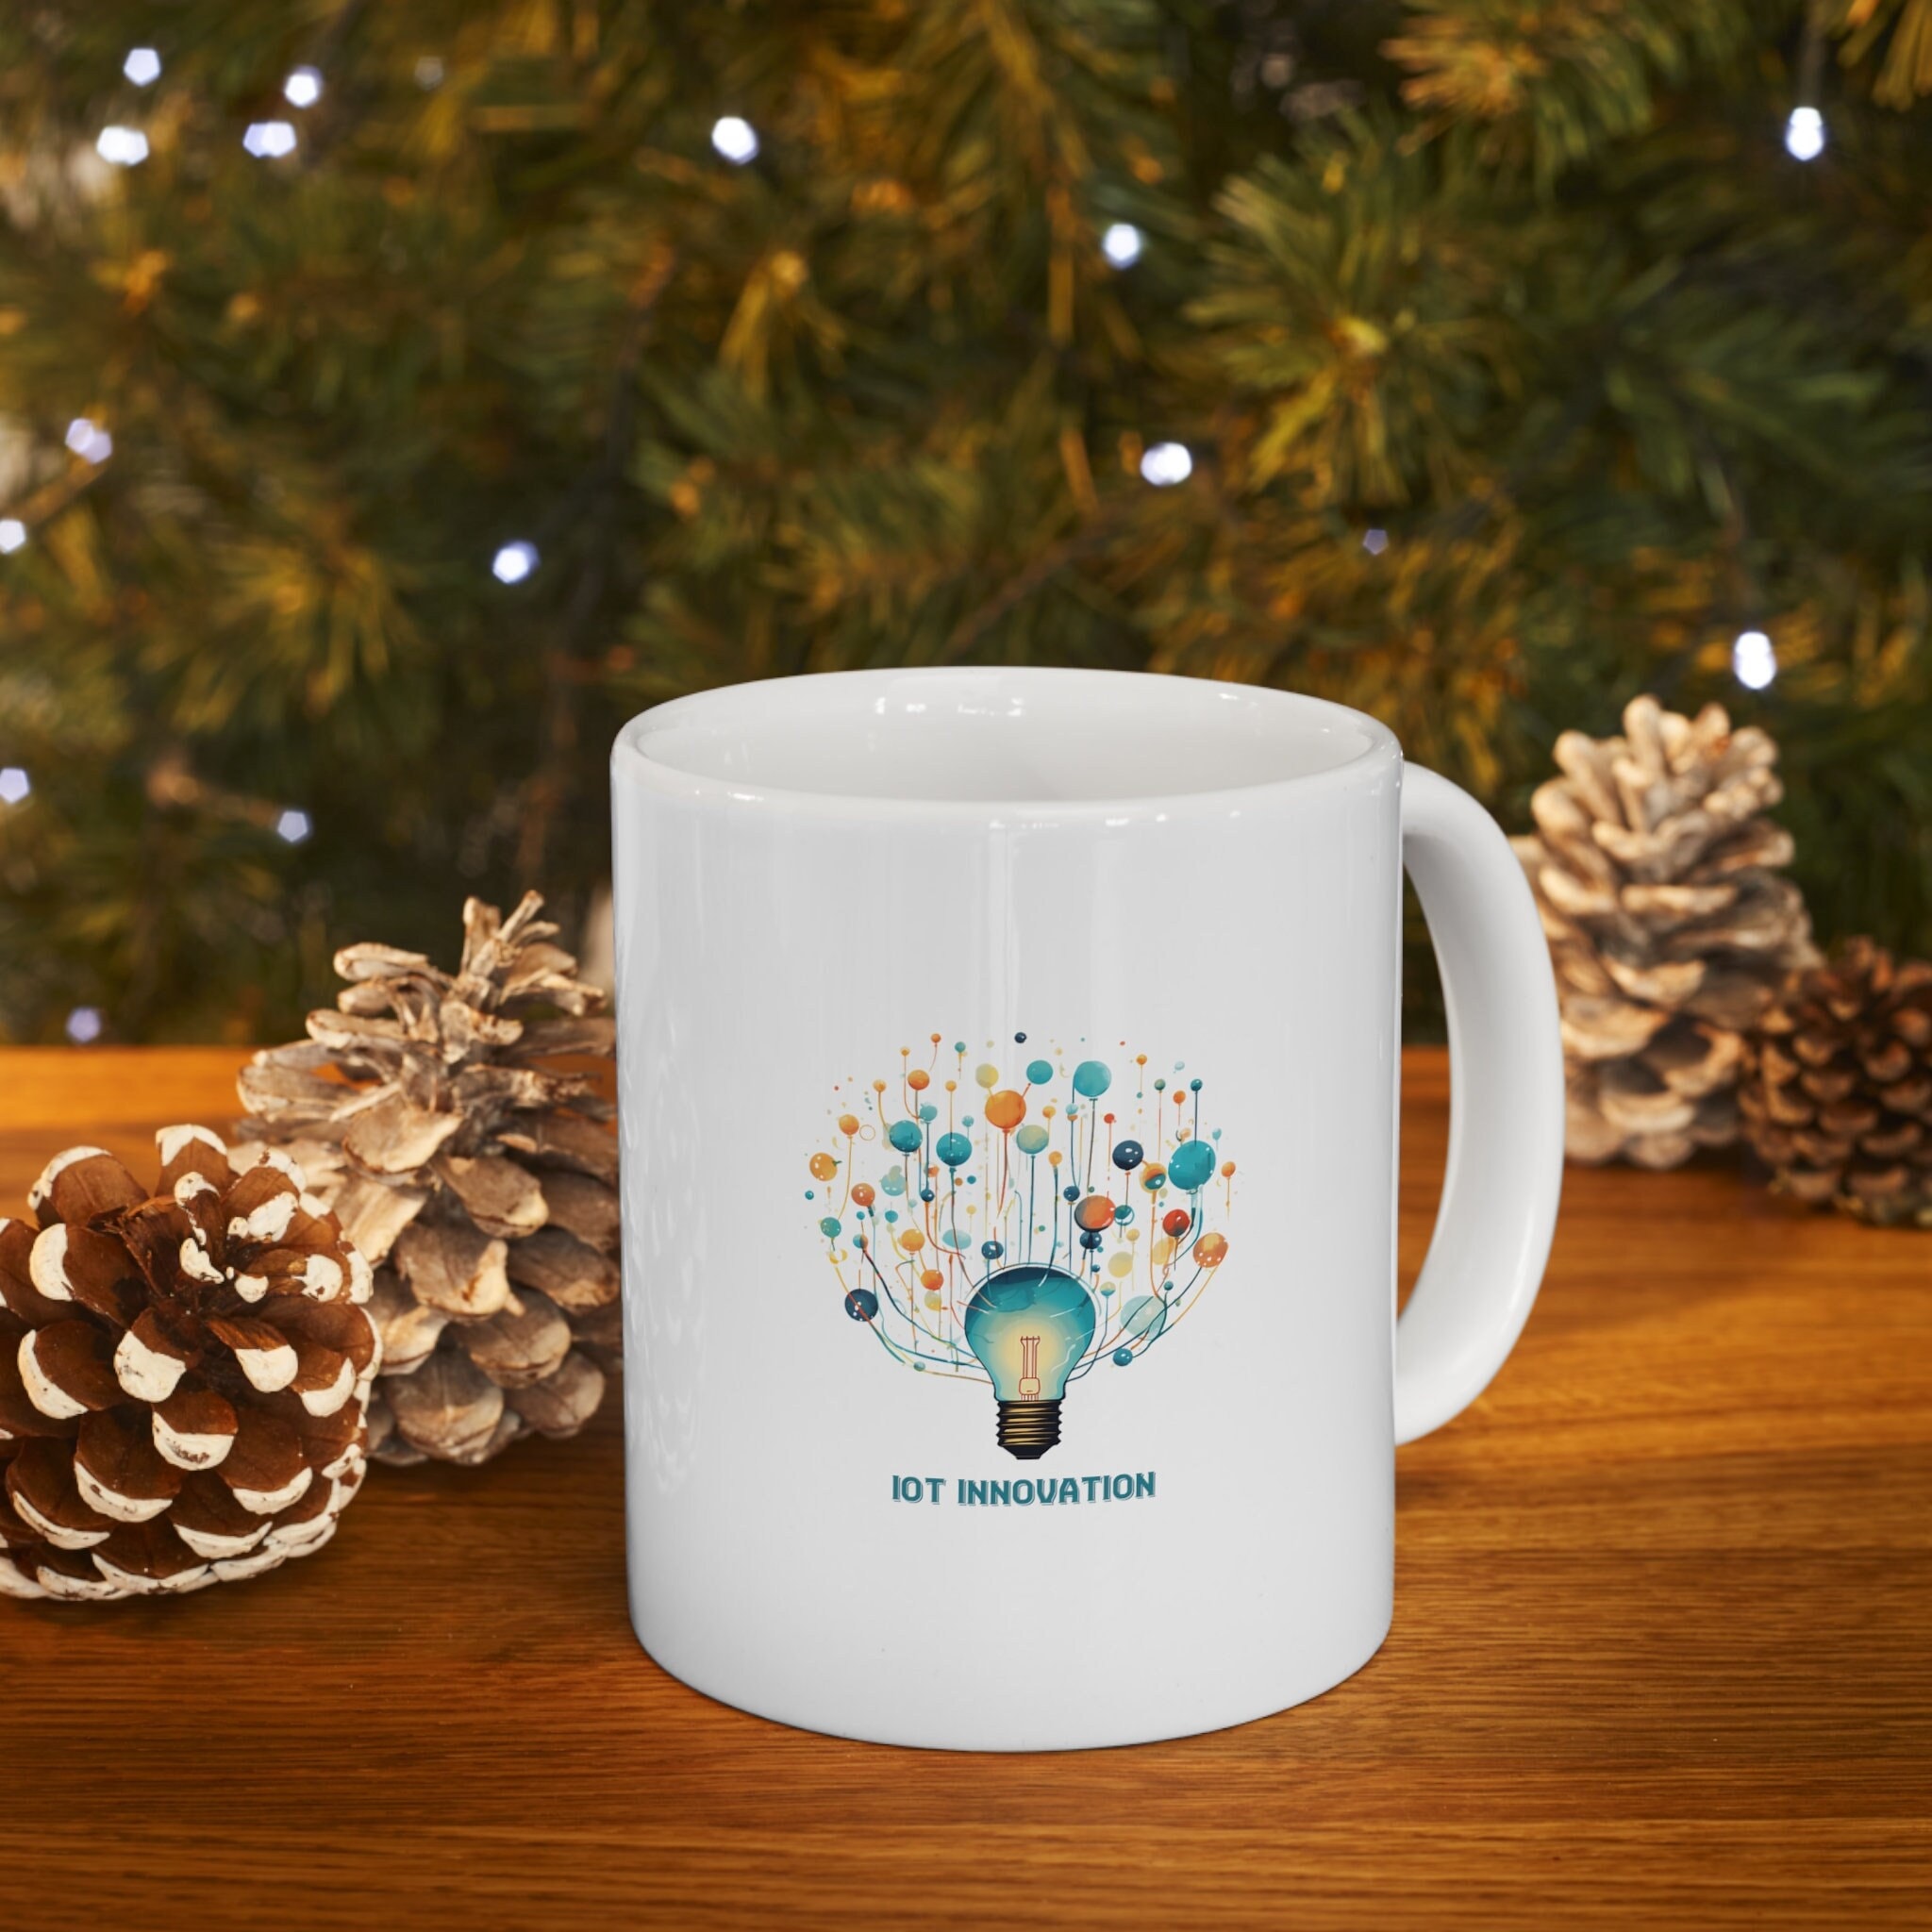 10 Cool and Creative Coffee Cups, Mugs for Geeks - TechEBlog